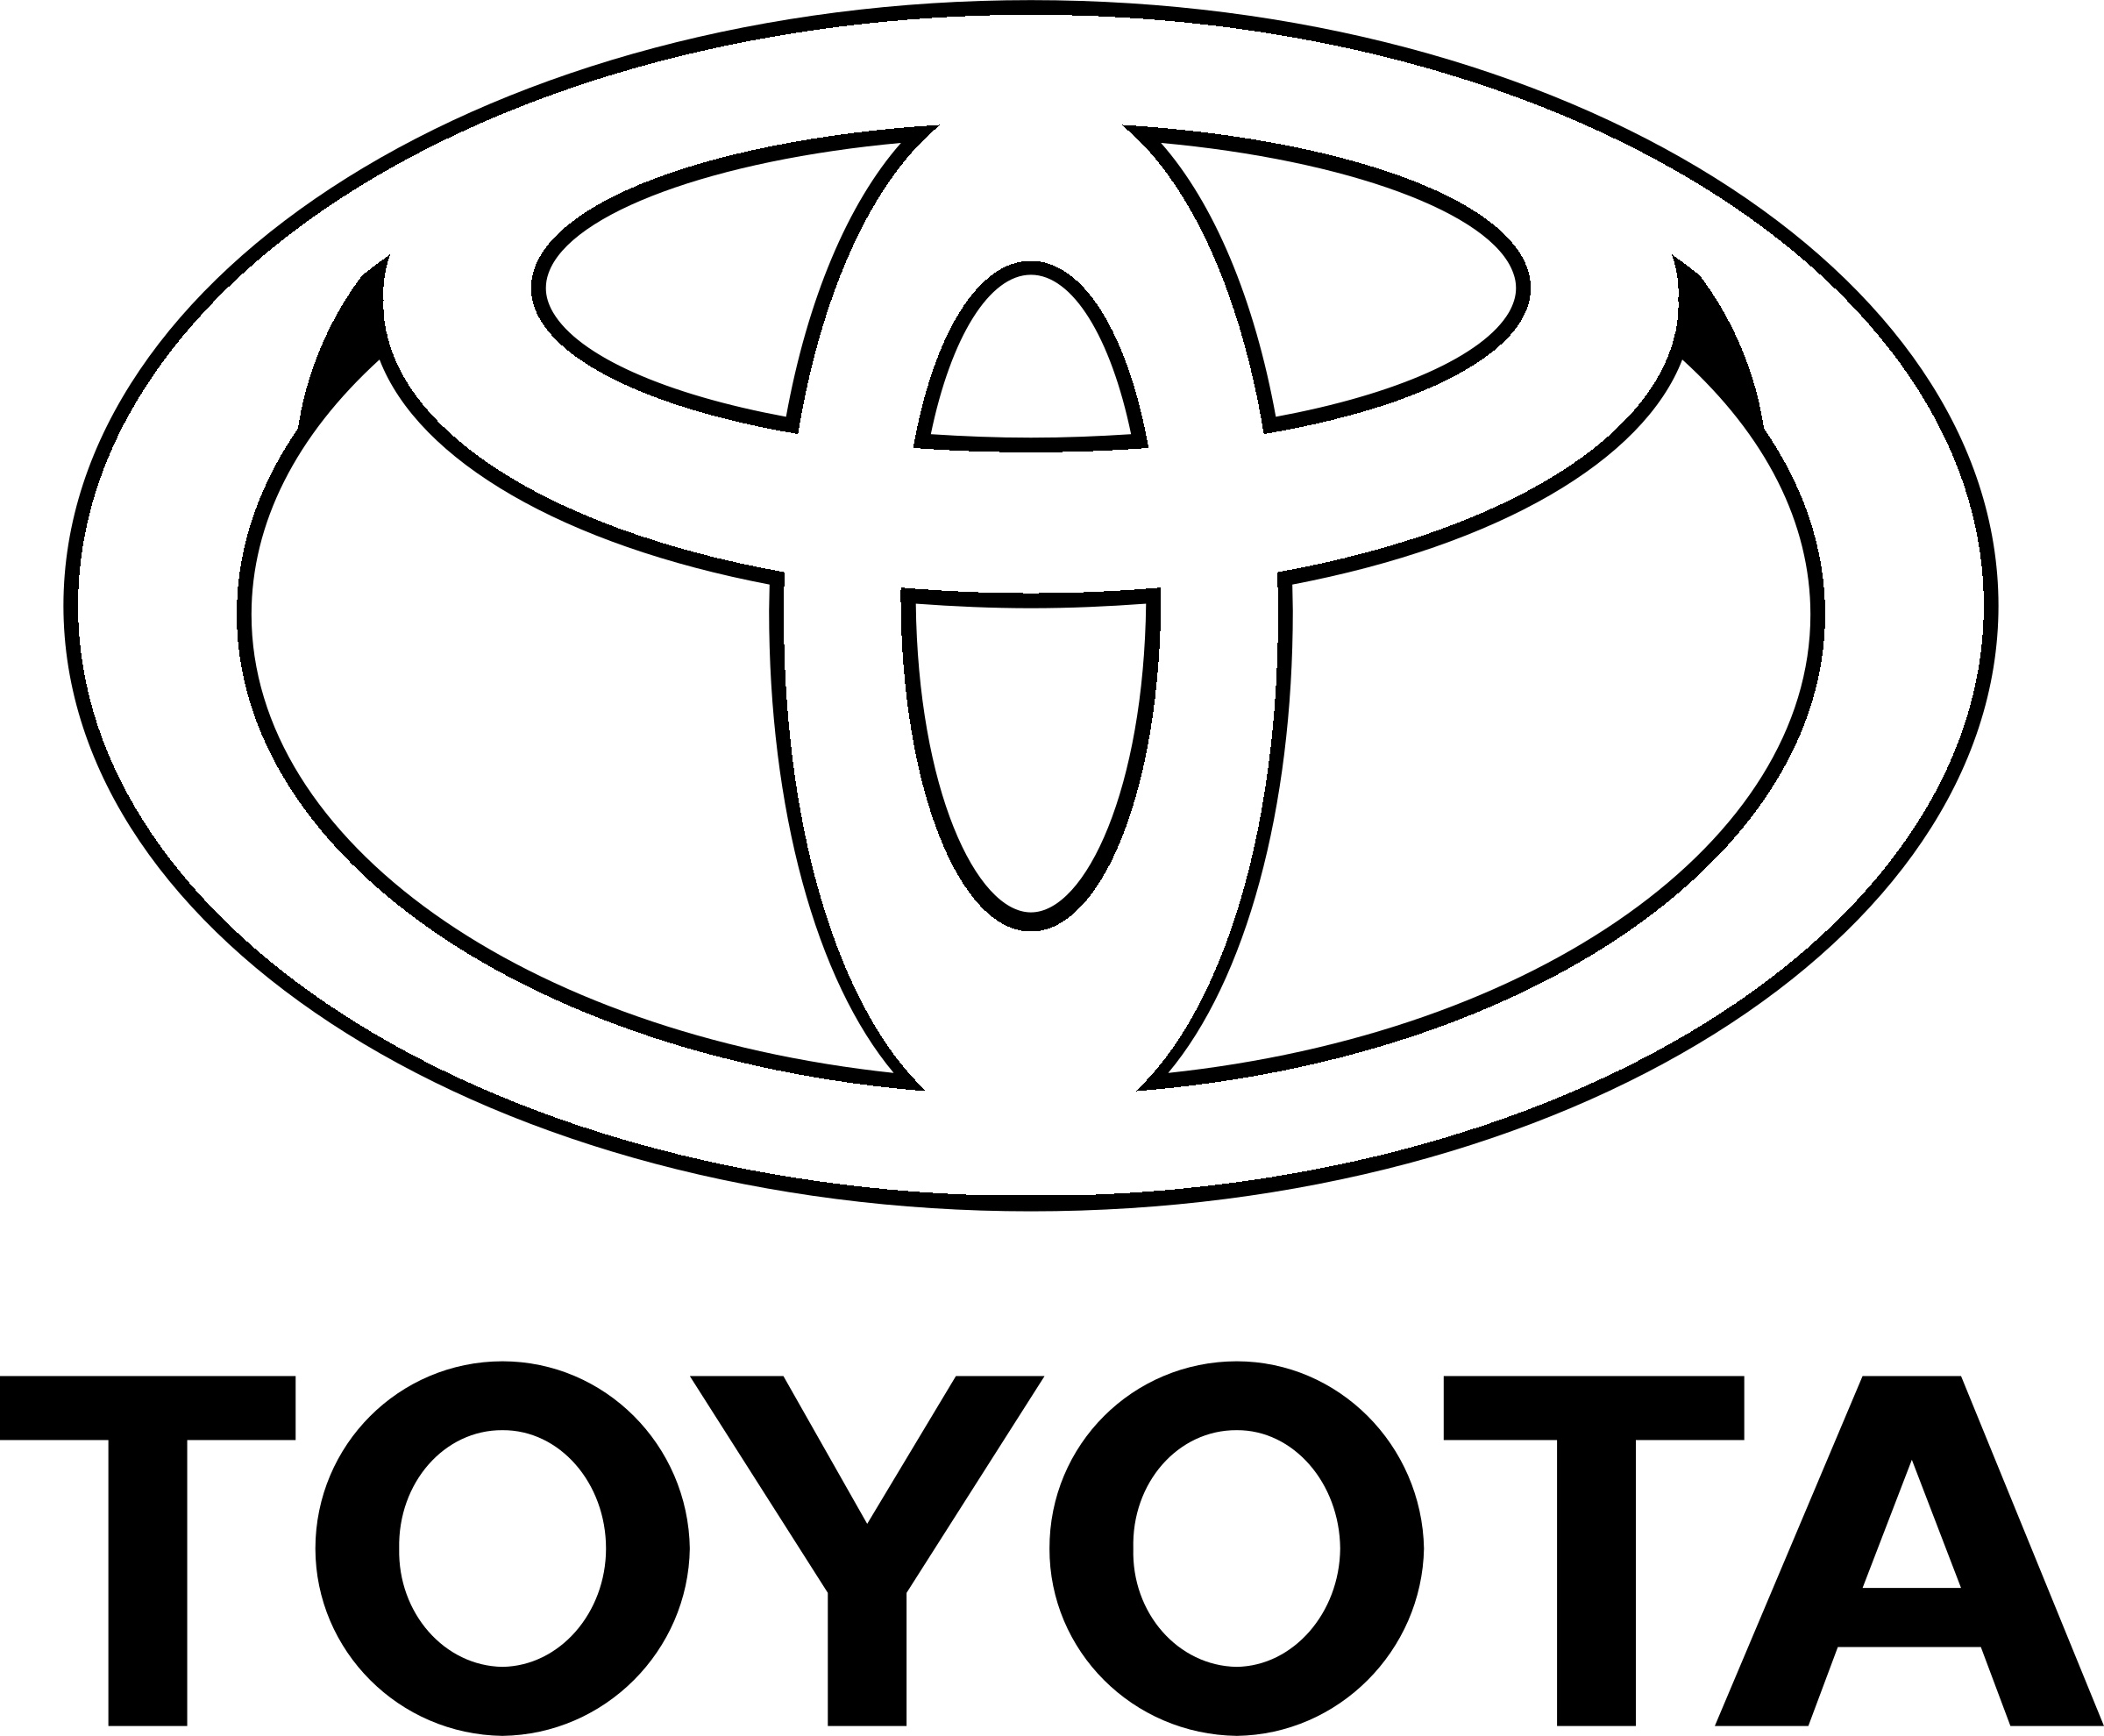 Black and White Toyota Logo - Toyota Logo PNG Transparent & SVG Vector - Freebie Supply